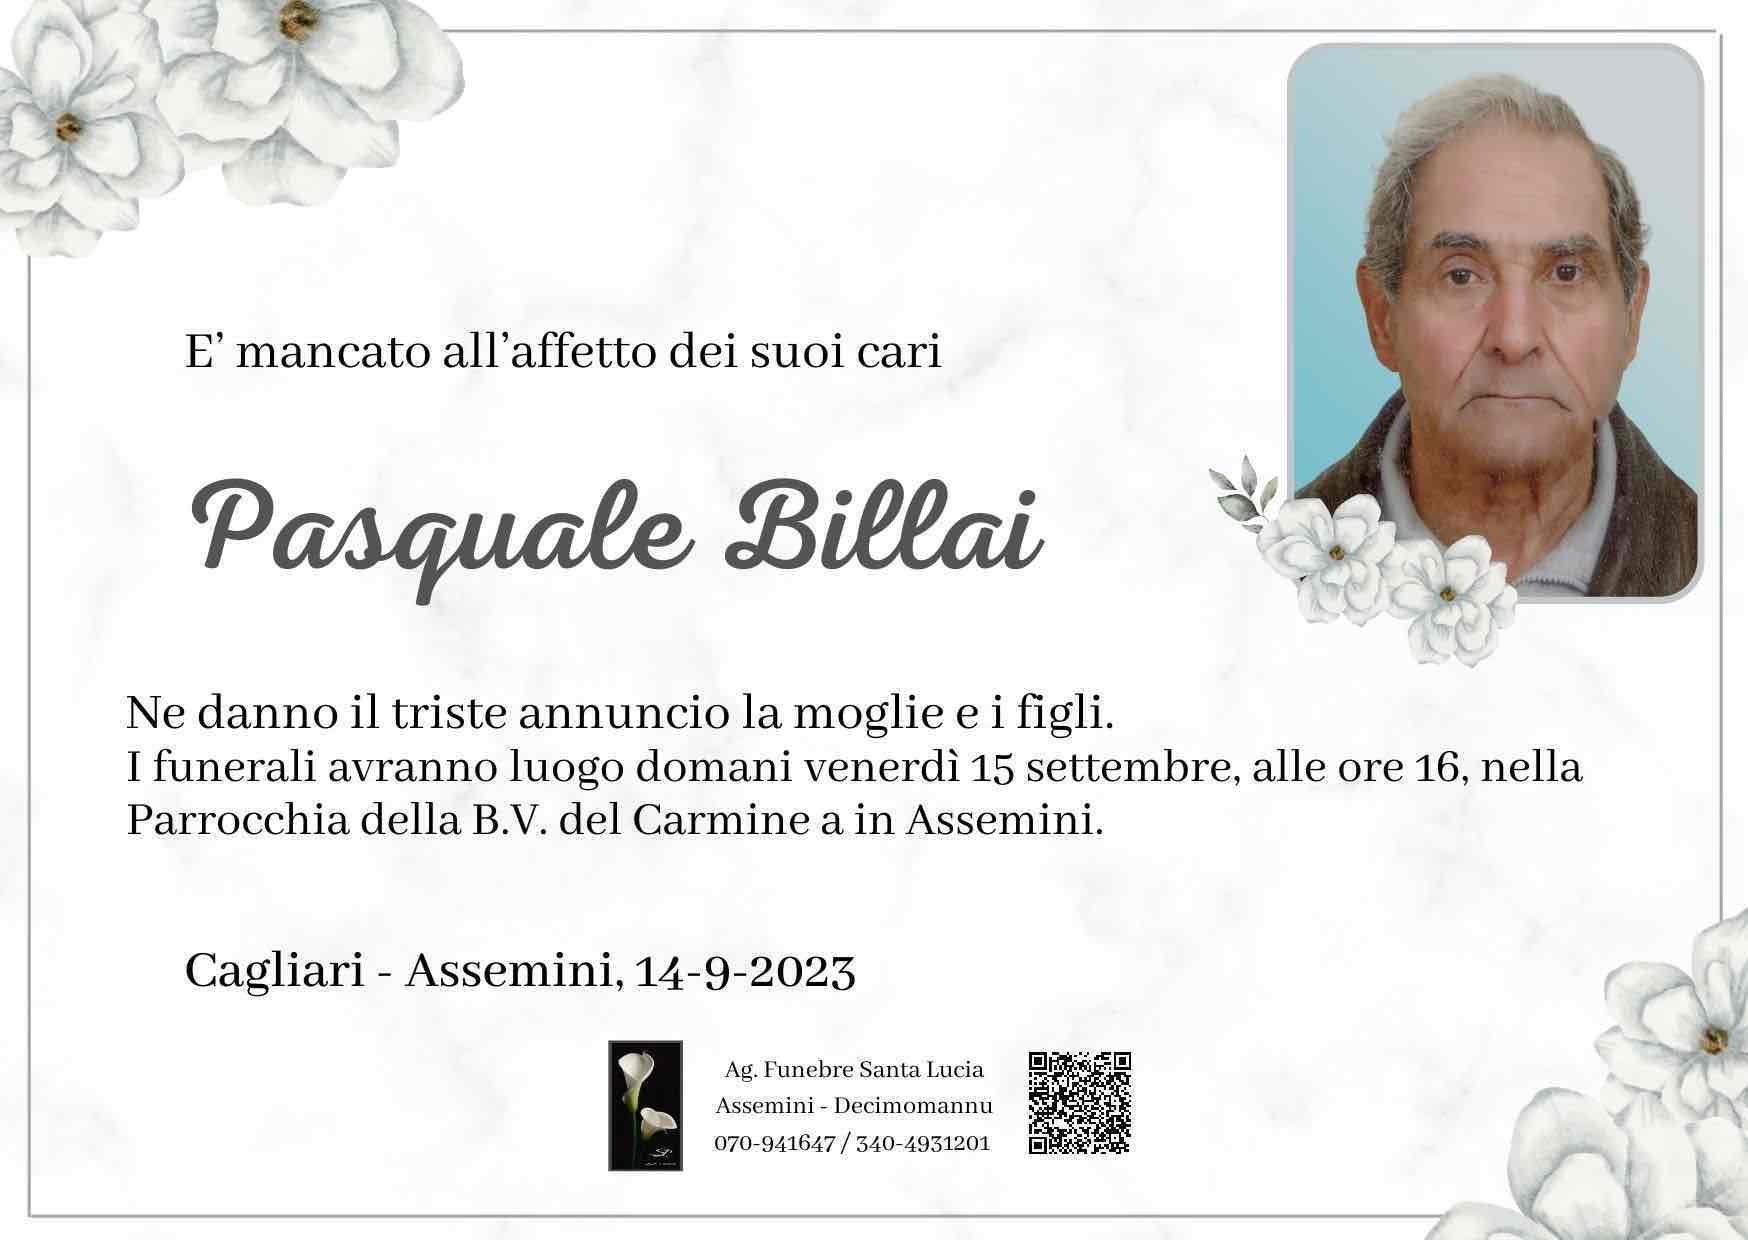 Pasquale Billai